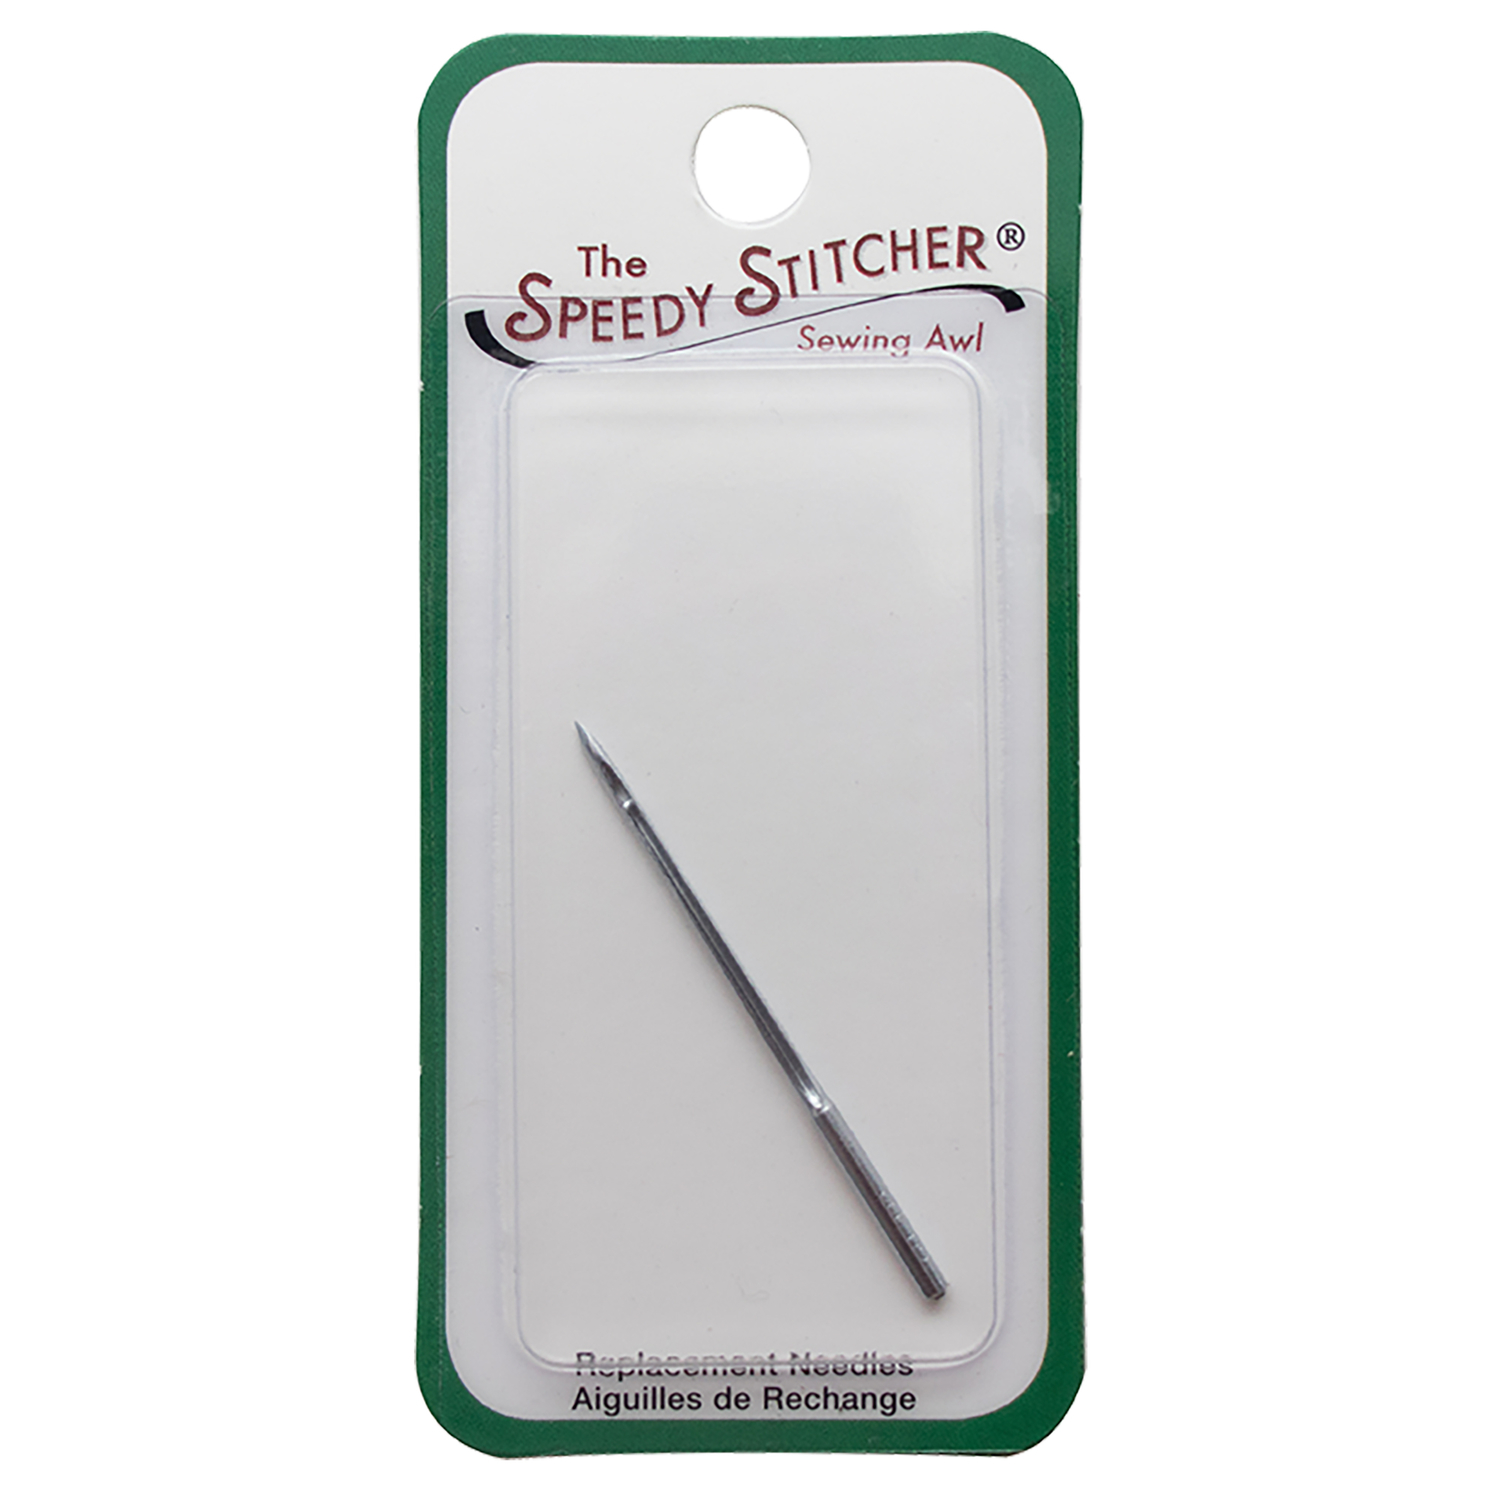 Speedy Stitcher Sewing Awl Kit - Sewing Kit - Stitcher Kit, Muzzleloader  Supplies, Reenactment